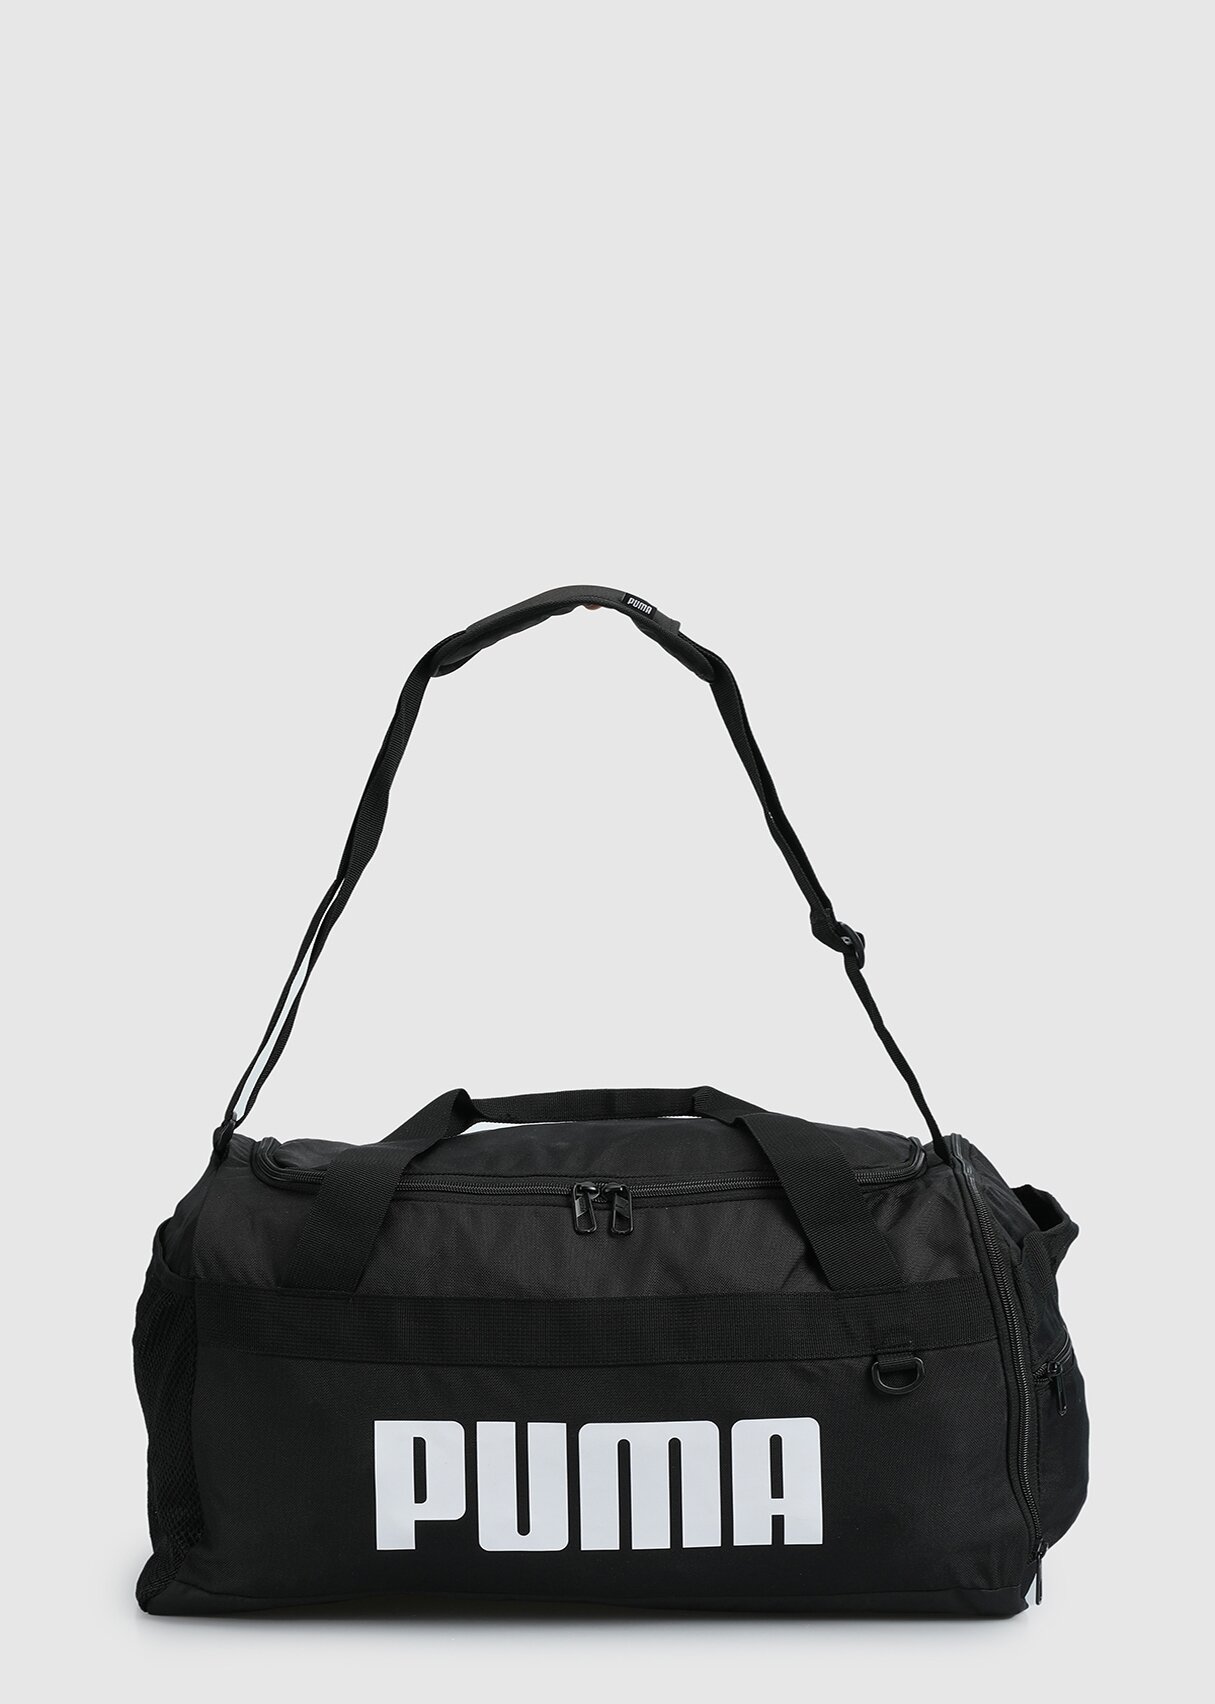 Puma 07953001 PUMA Challenger Duffel Bag S